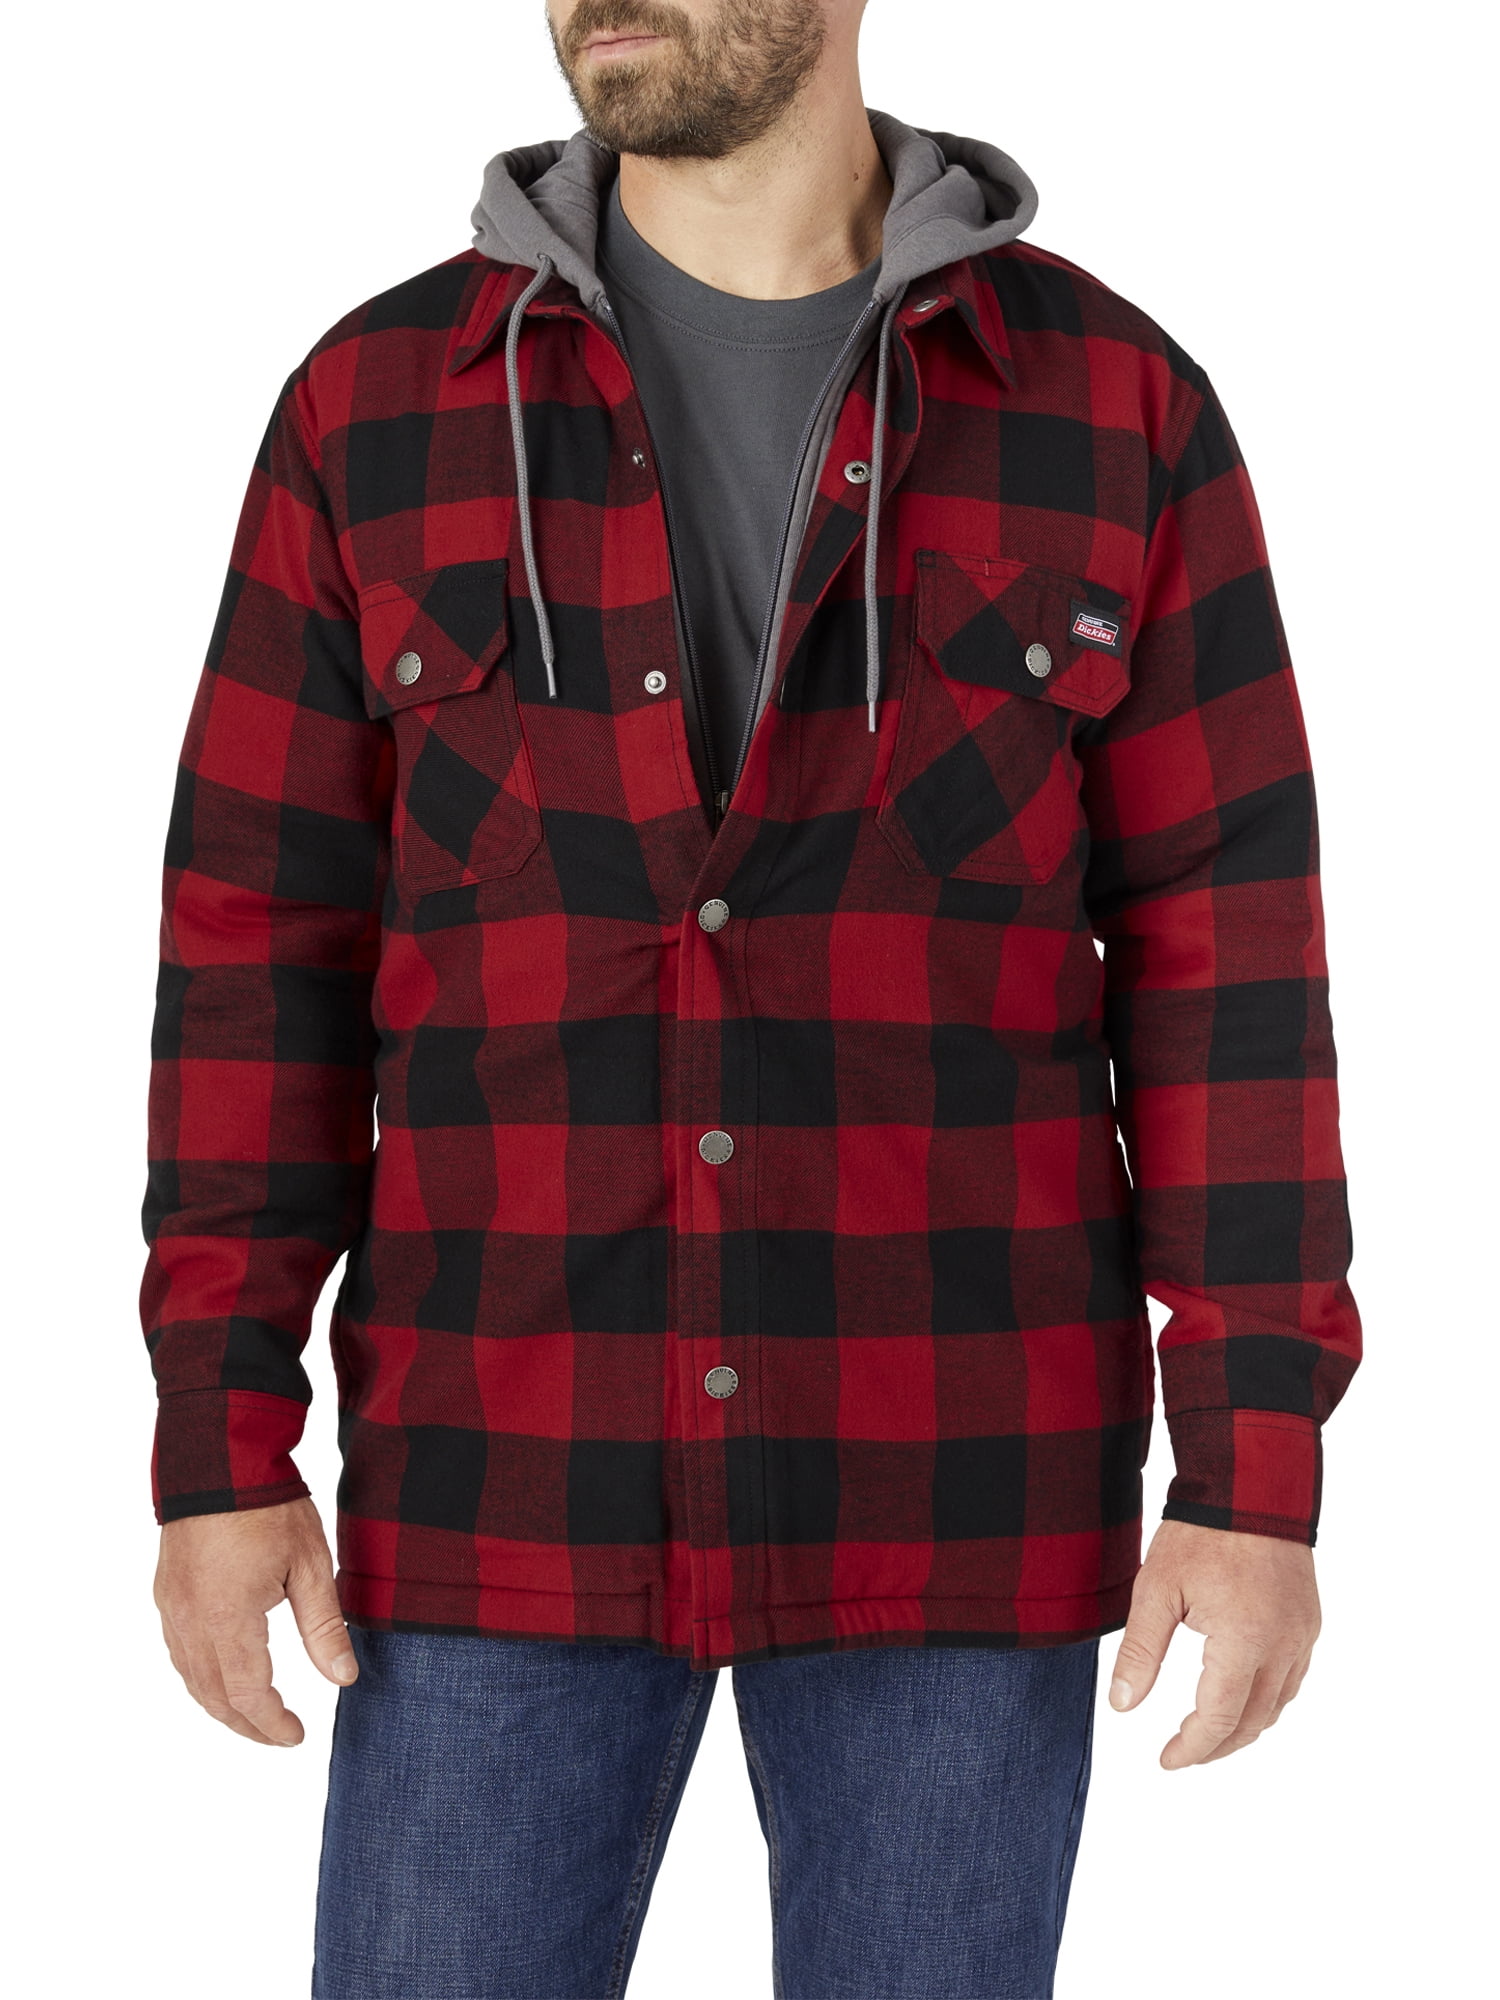 Genuine Dickies Sherpa Lined Hooded Flannel Shirt Jacket   Walmart.com